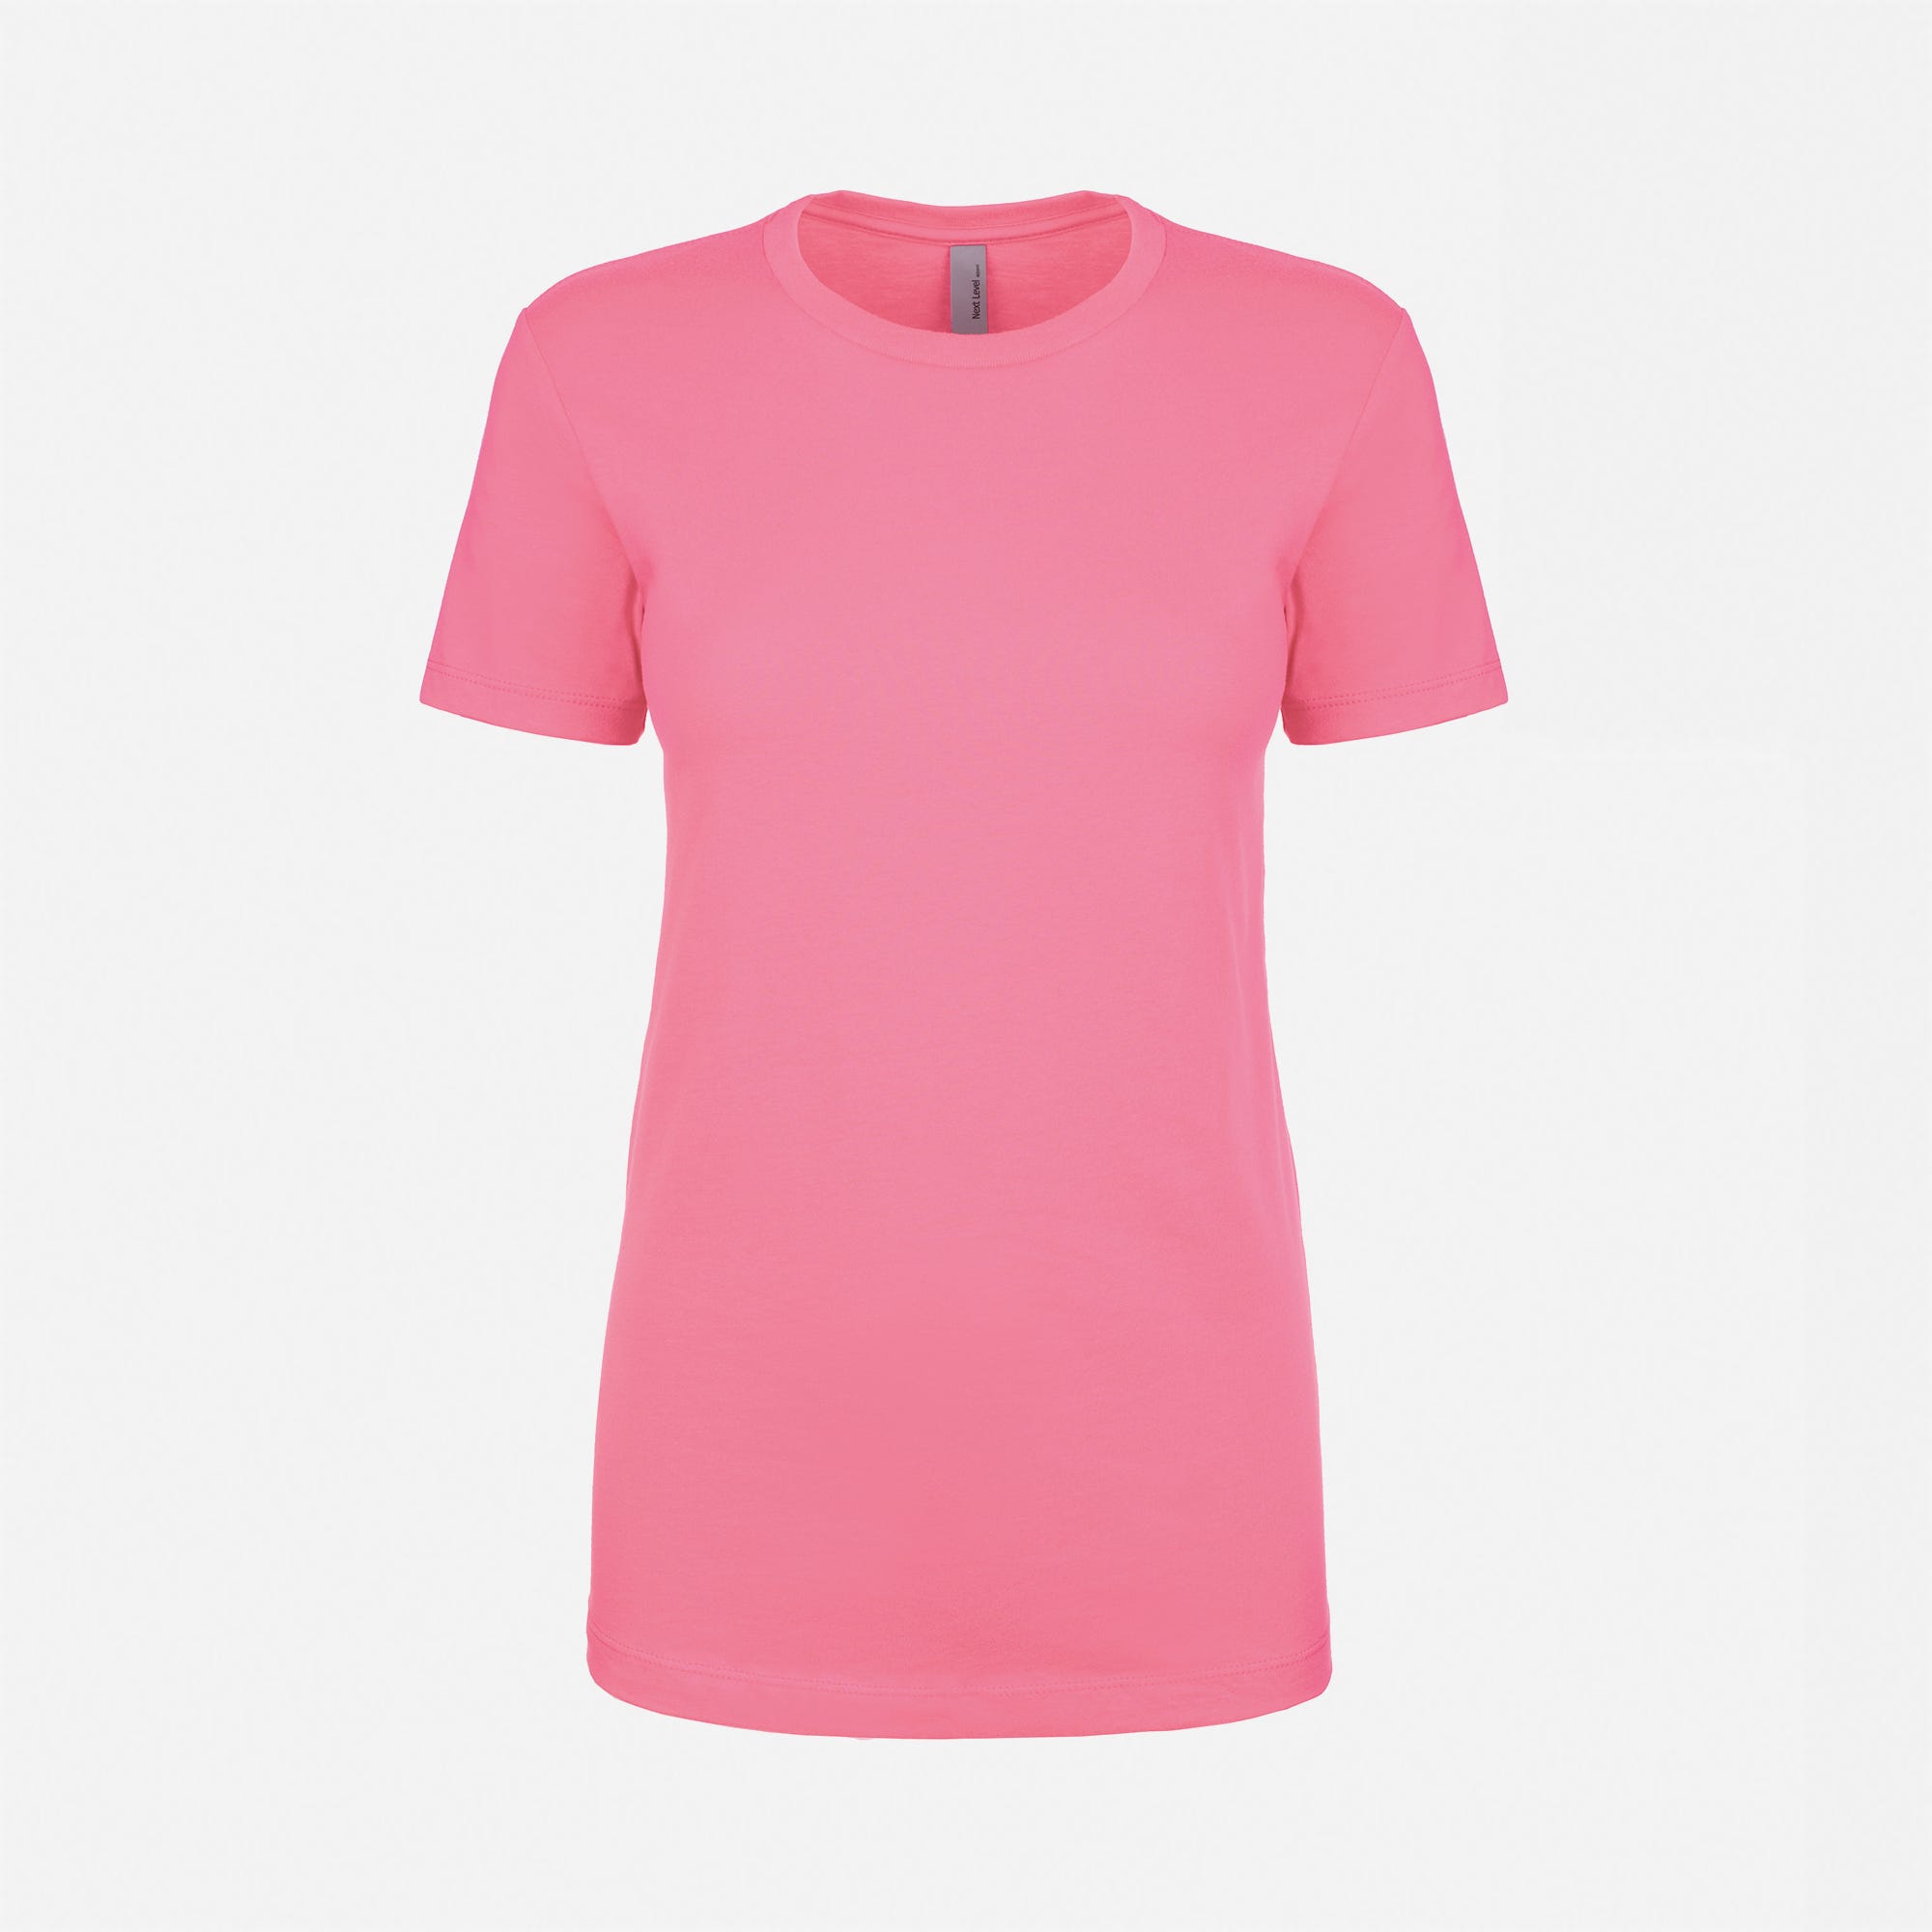 Cotton Boyfriend T-Shirt Hot Pink 3900 Next Level Apparel Sample Front View